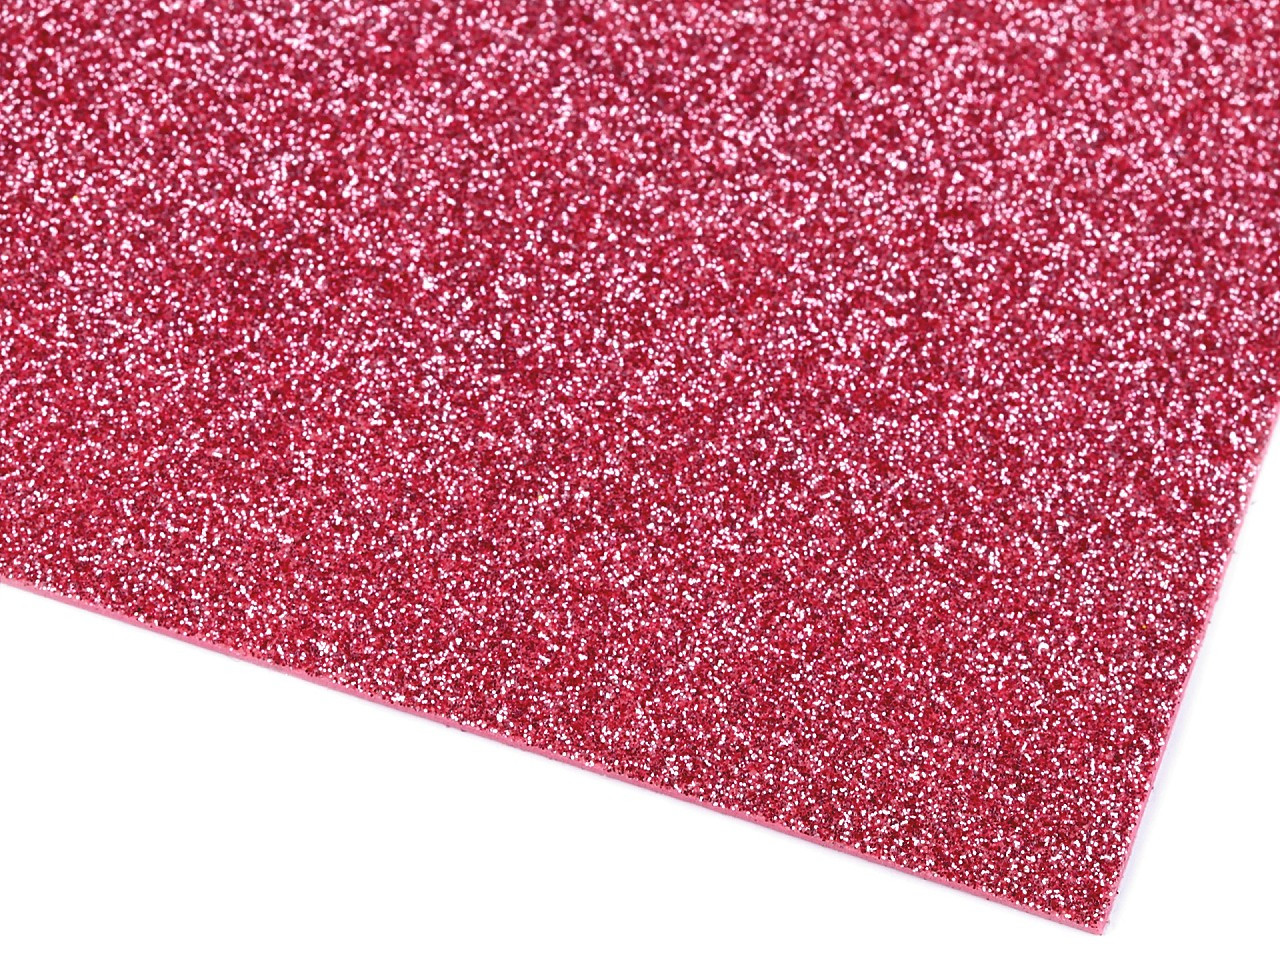 Samolepicí pěnová guma Moosgummi s glitry 20x30 cm, barva 15 růžová malinová